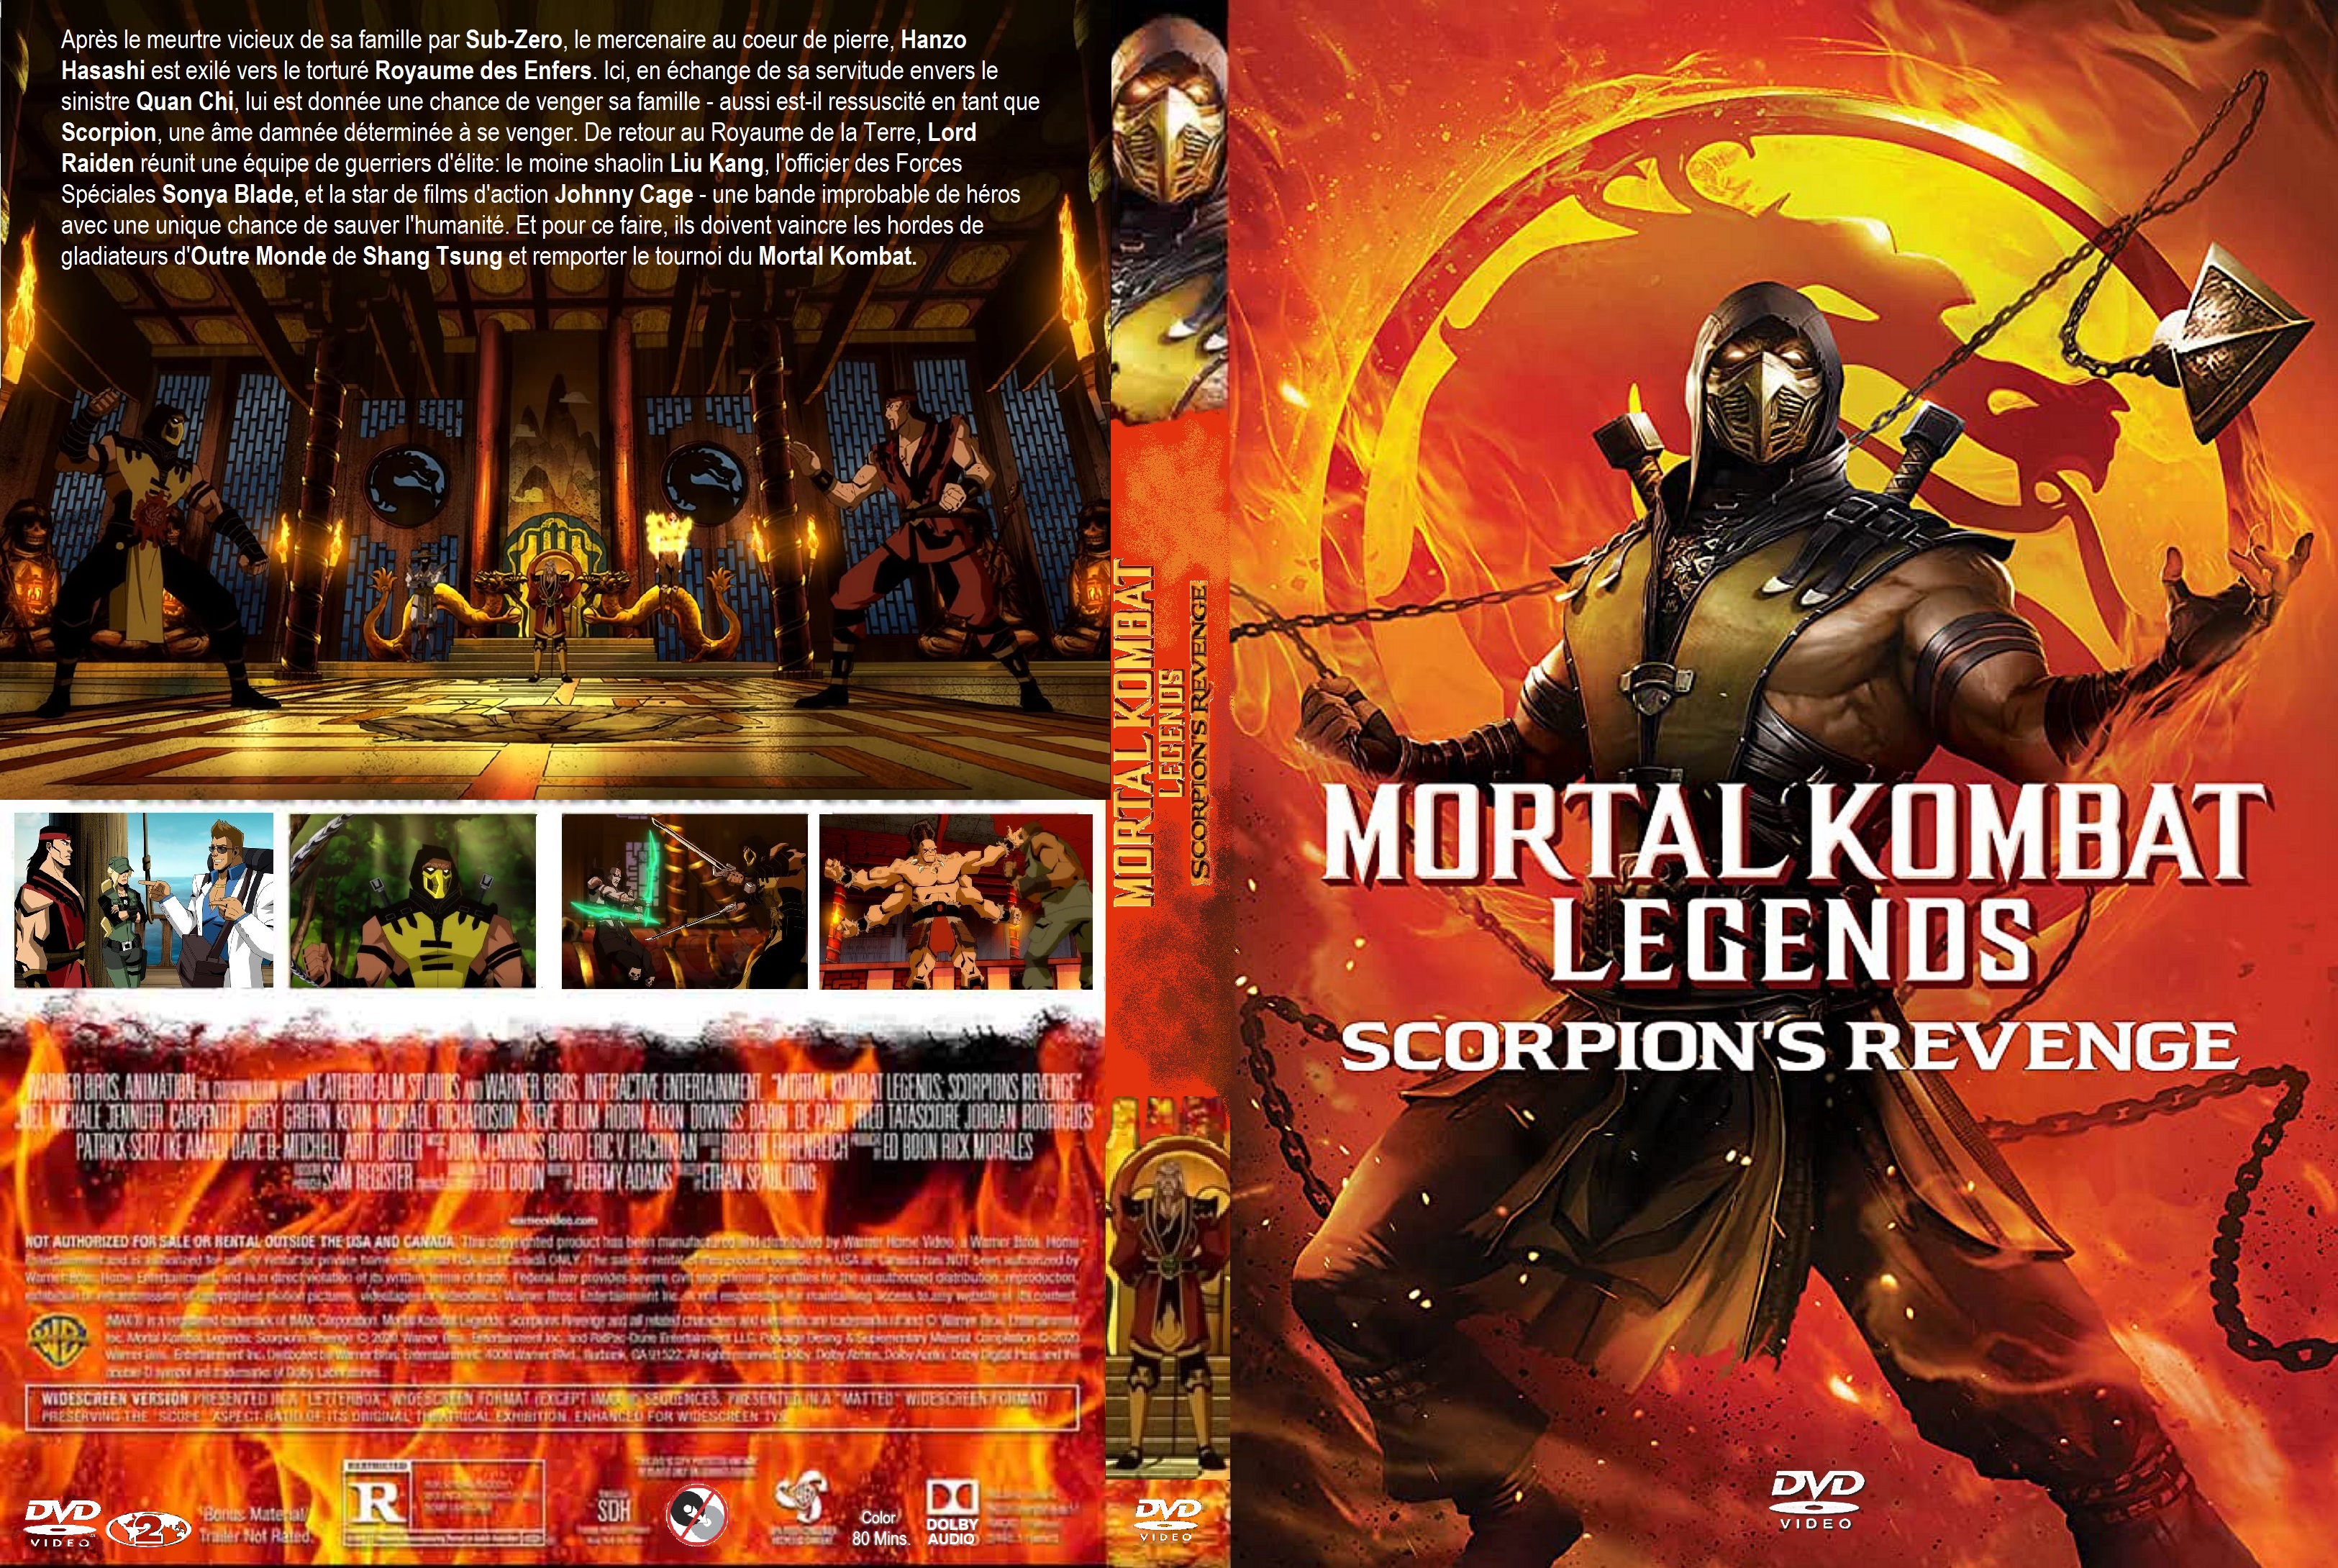 Jaquette DVD Mortal kombat legends scorpion